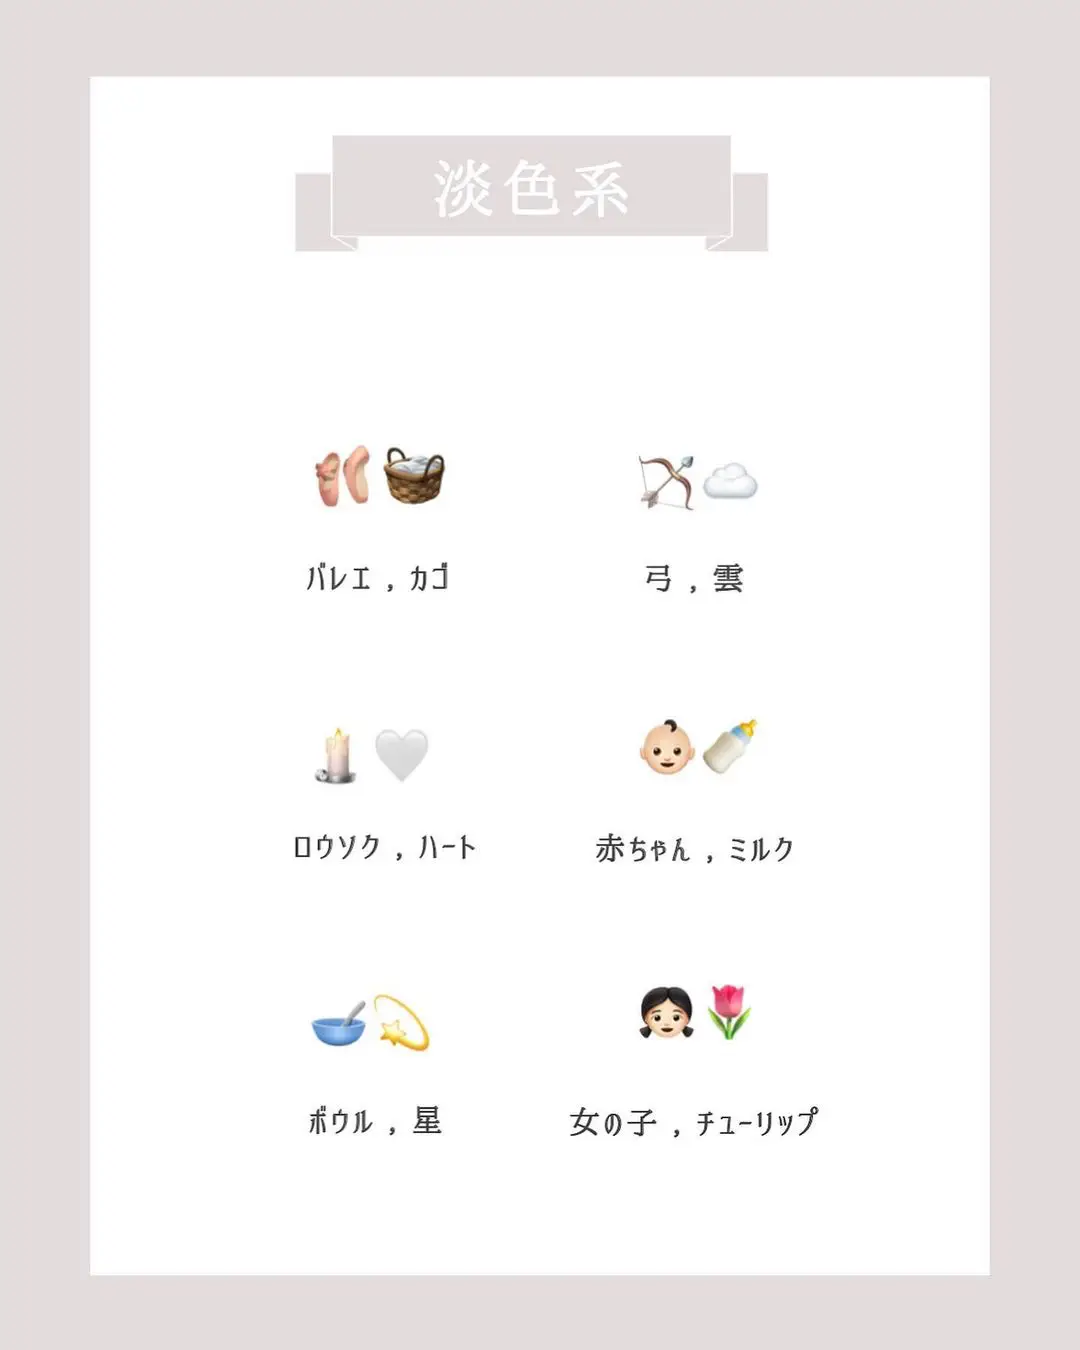 Iphone New絵文字 𝕙𝕚𝕪𝕠 が投稿したフォトブック Lemon8